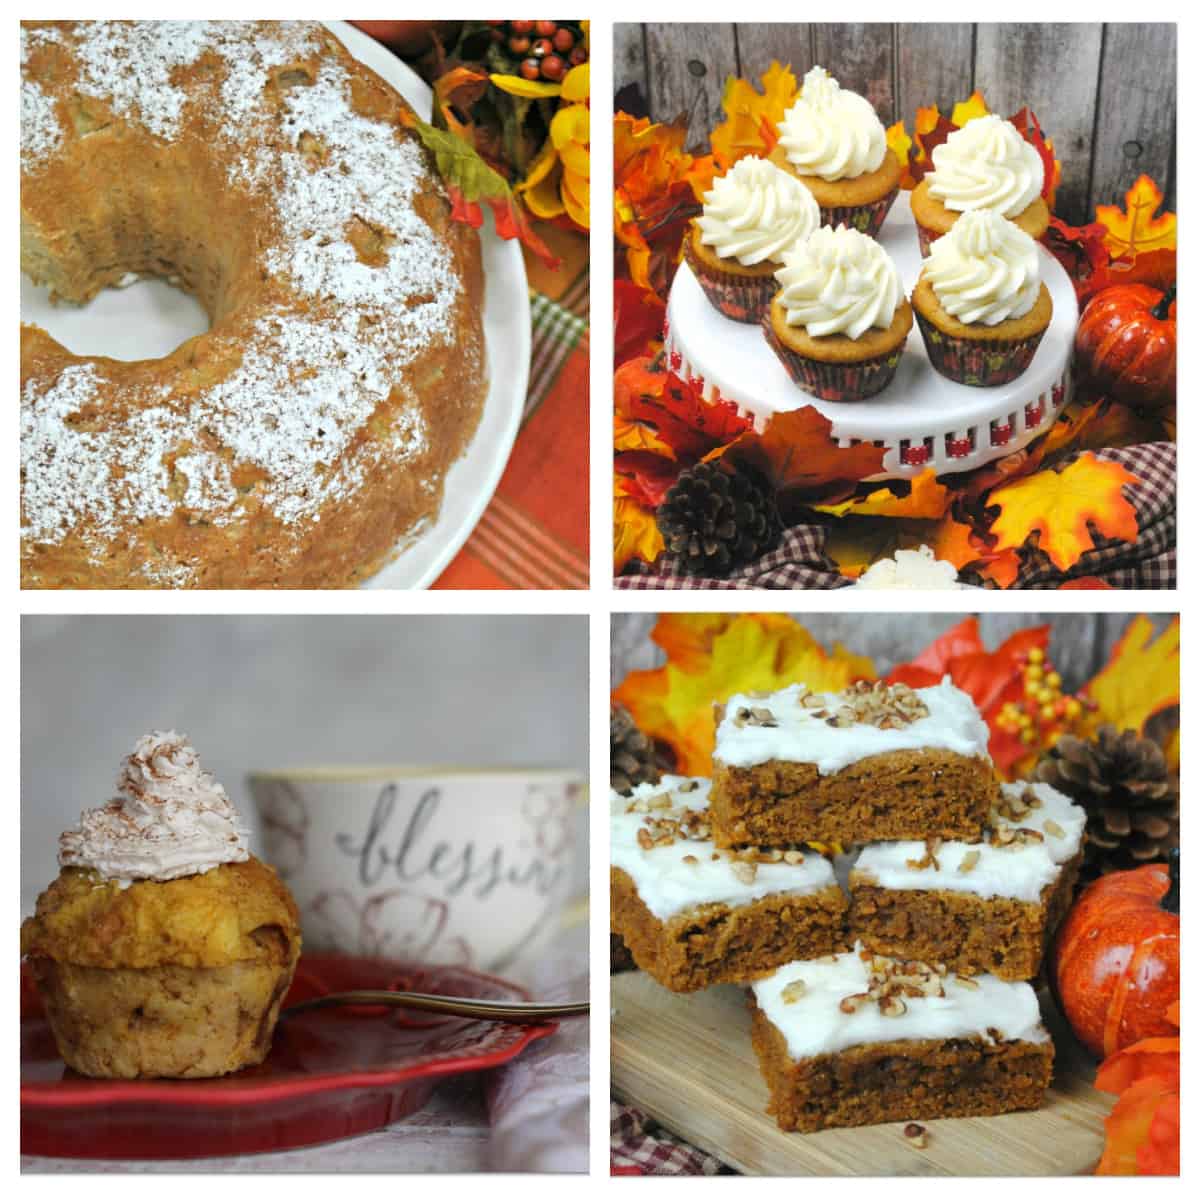 Apple cake, pumpkin cupcakes, pumpkin bread pudding, and pumpkin bars in a collage..